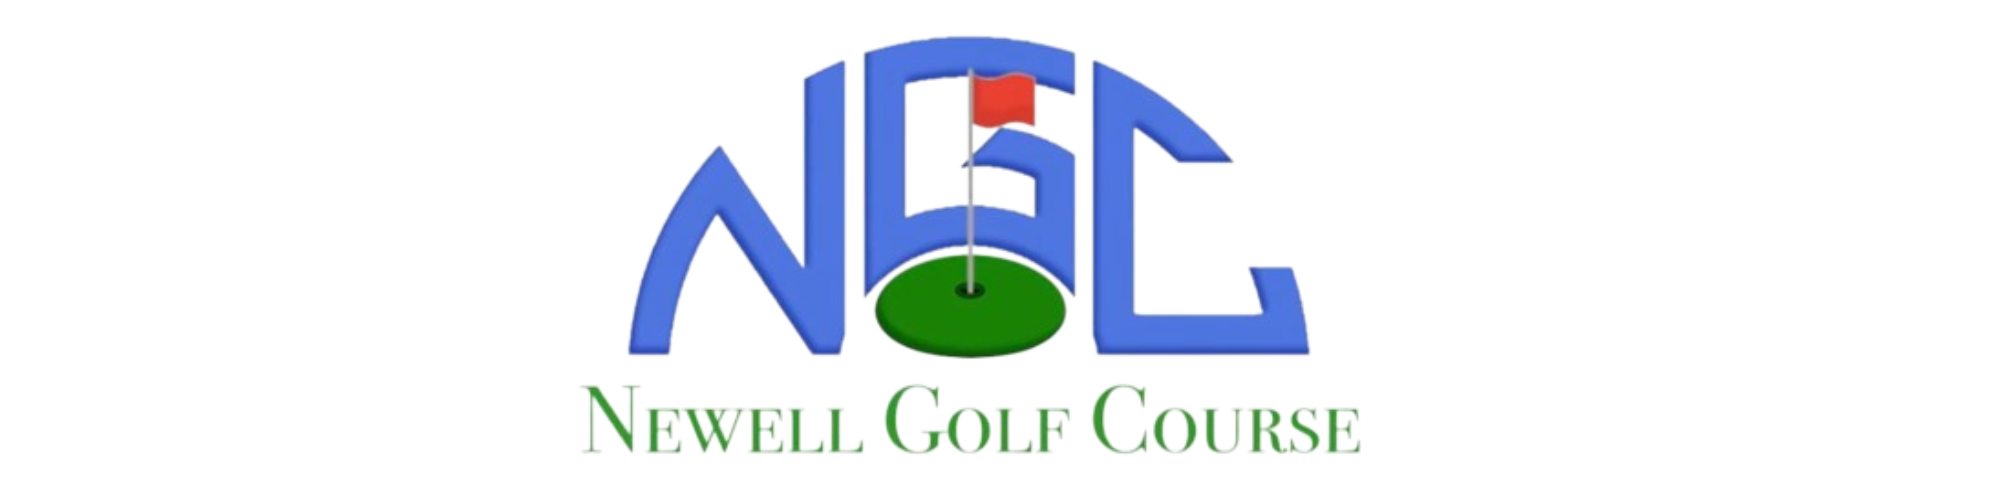 Newell Golf Course Logo